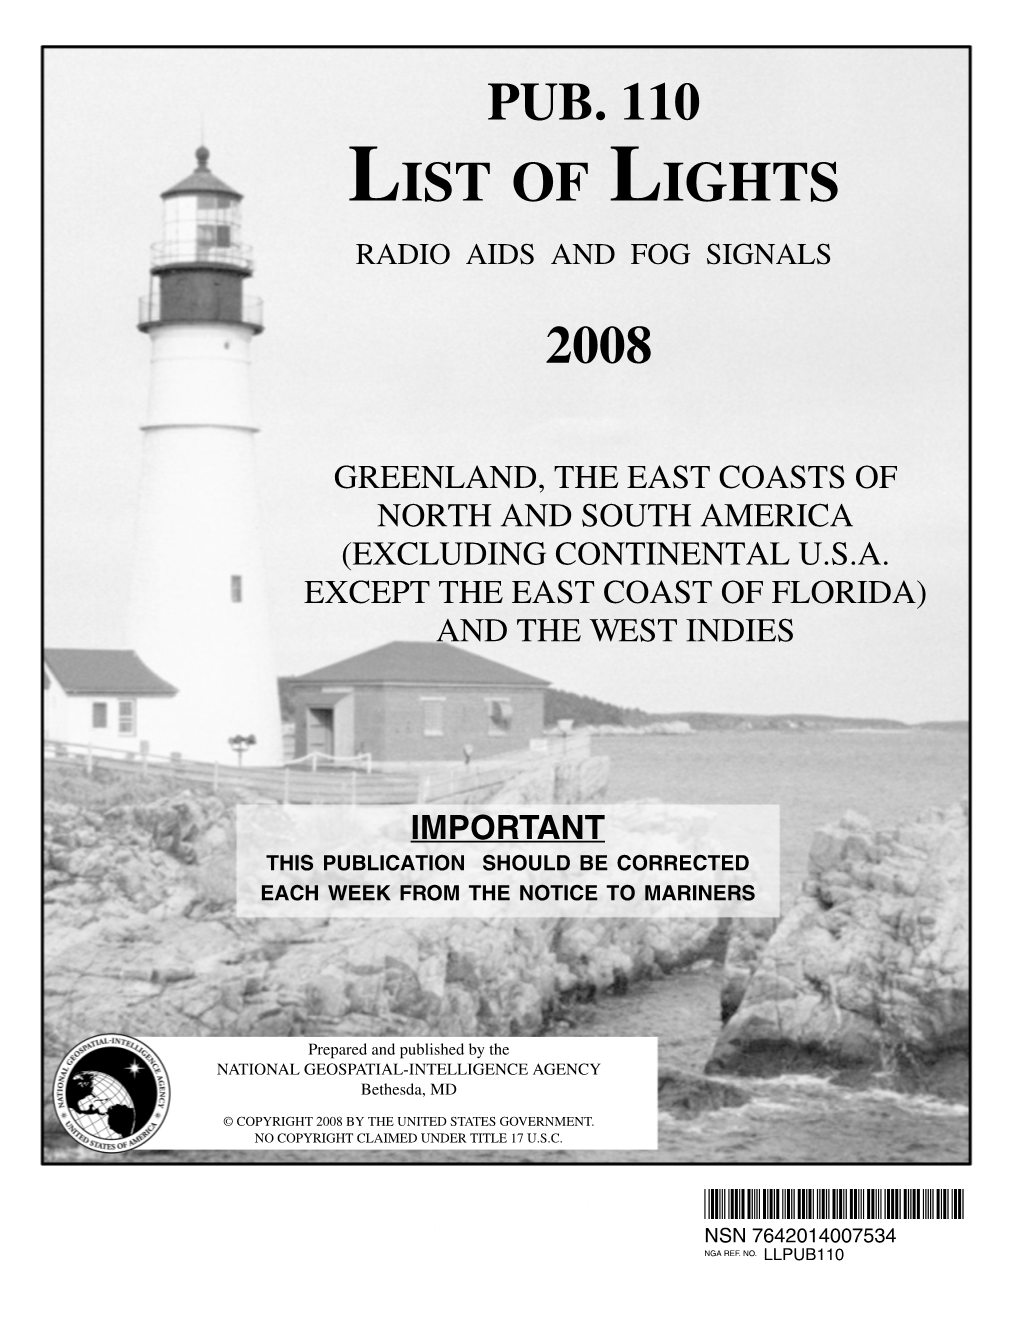 List of Lights Radio Aids and Fog Signals 2008